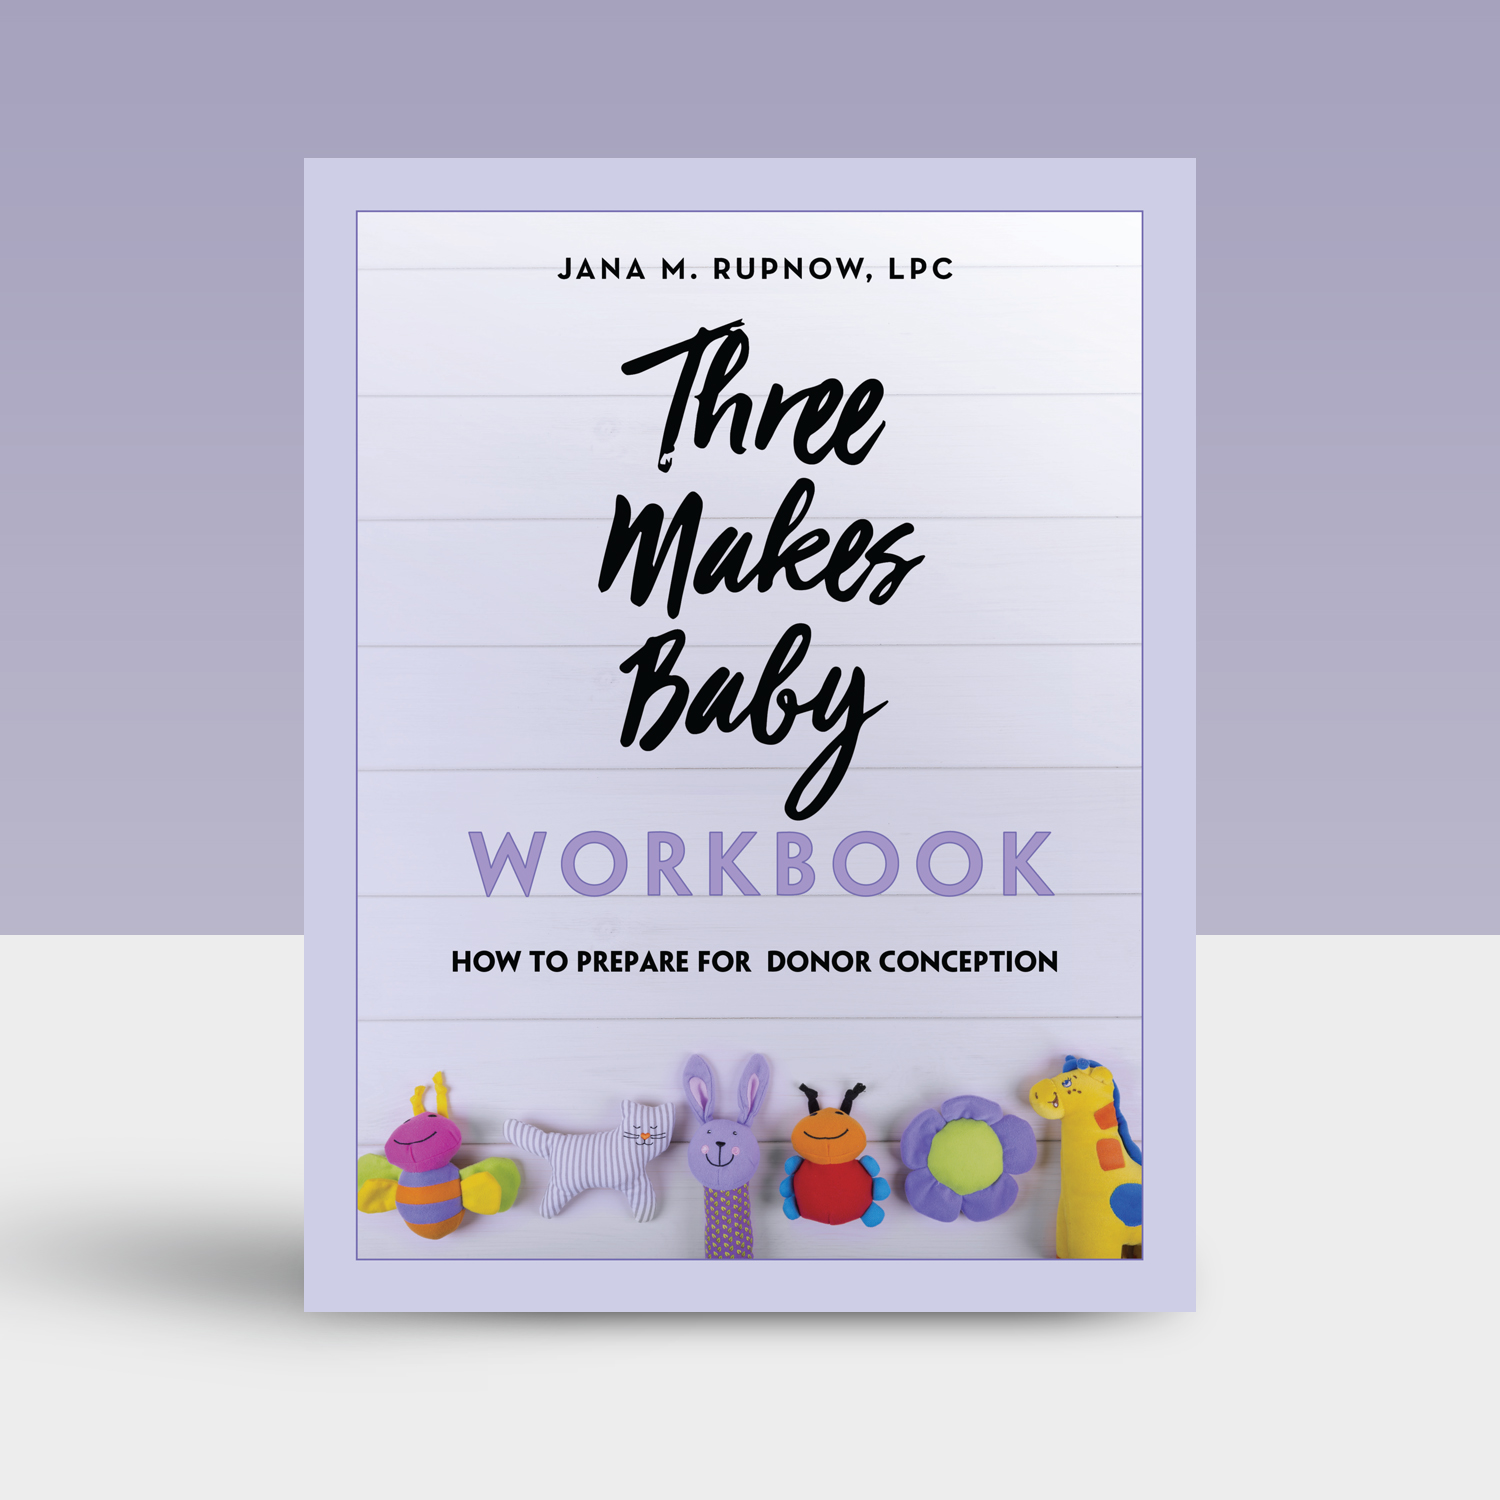 Three Makes Baby Workbook